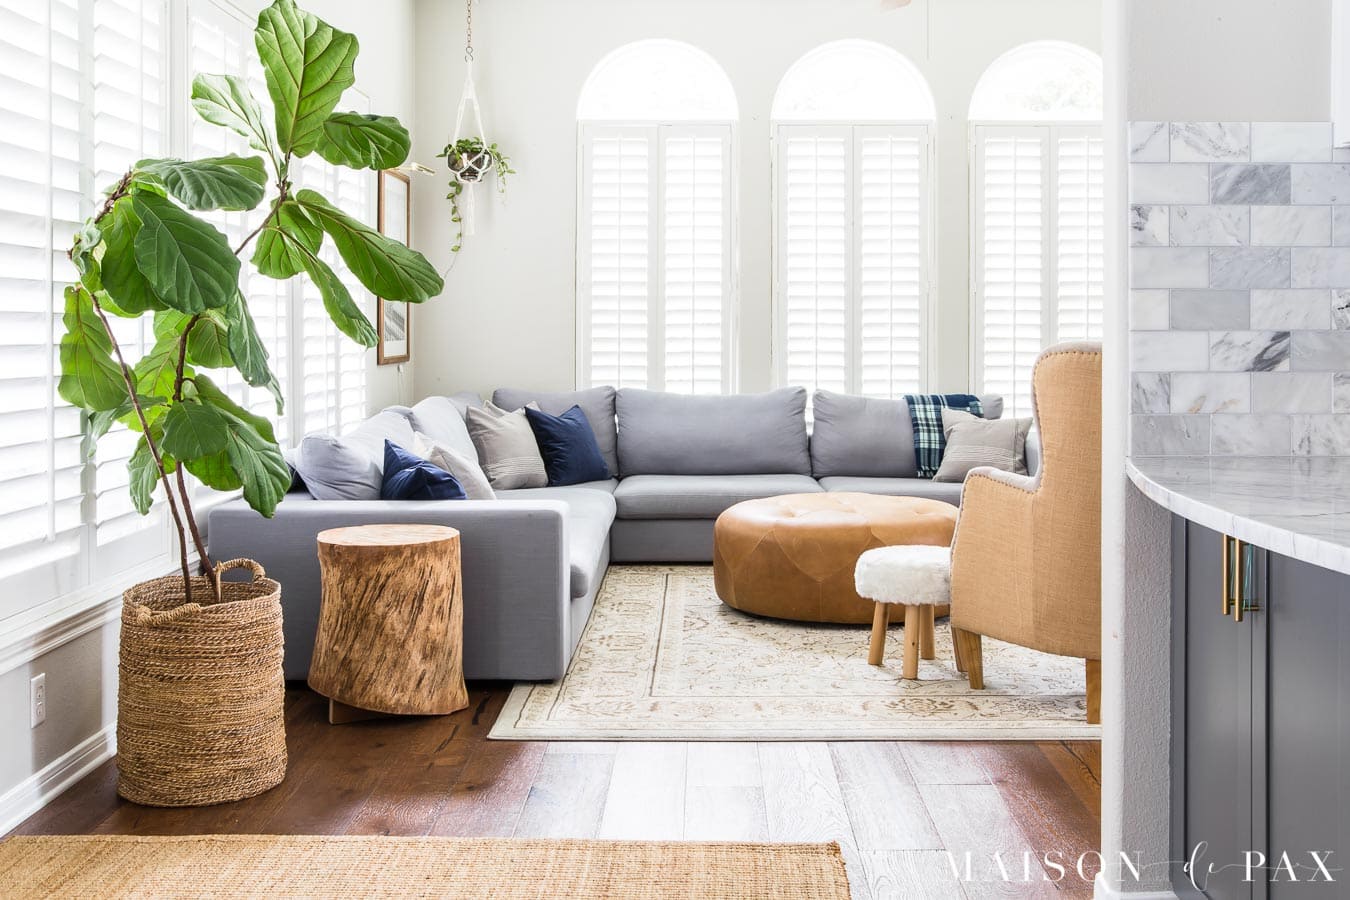 Gray Living Room with Simple Fall Decor - Maison de Pax